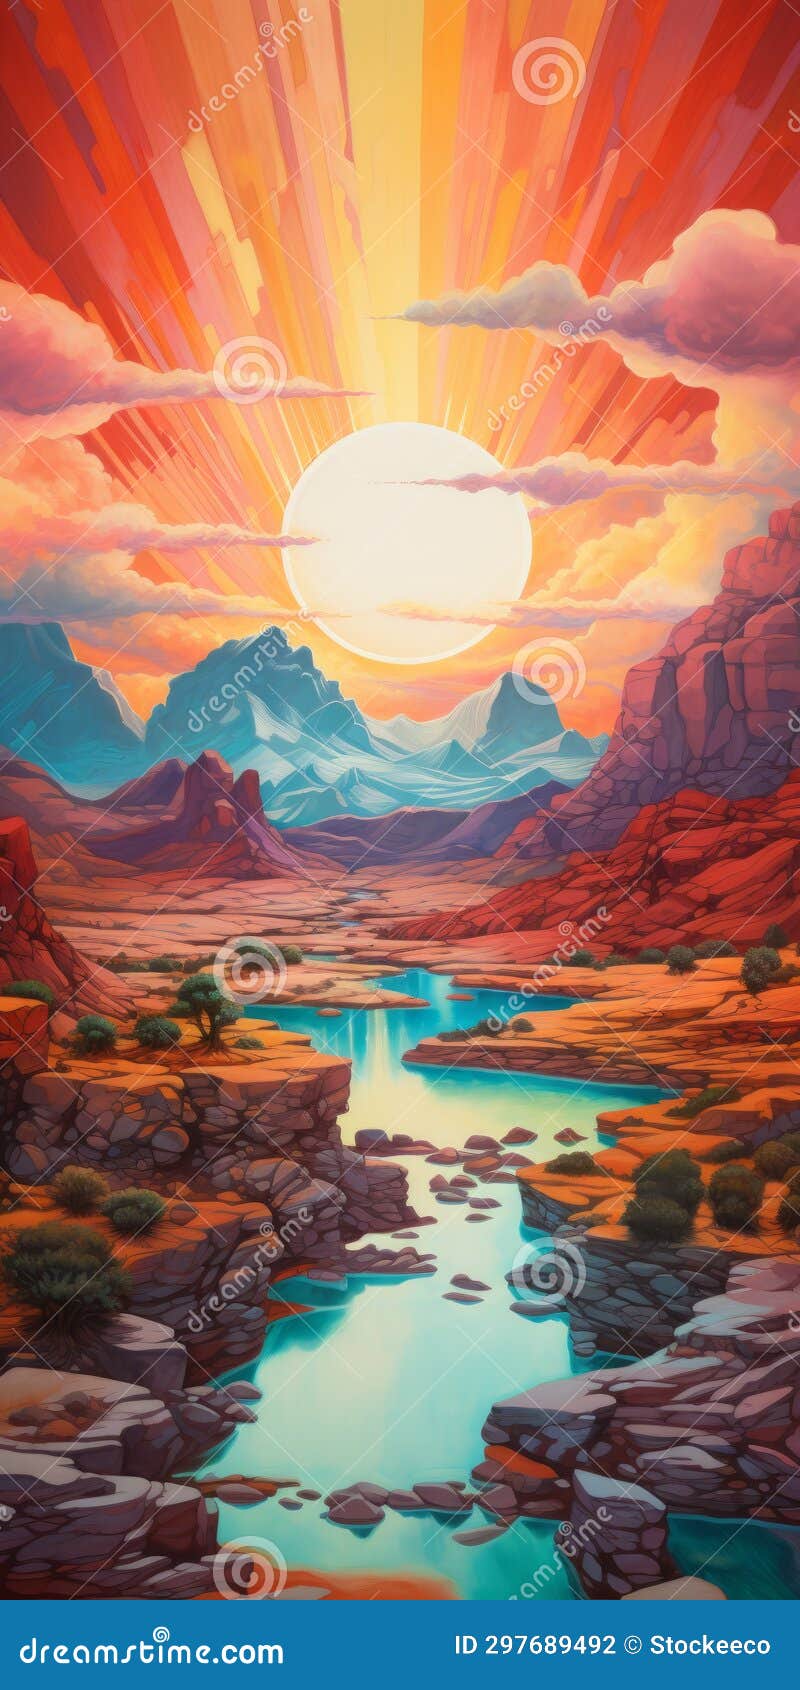 desert sunrise: a vibrant landscape painting inspired by tristan eaton and tim hildebrandt